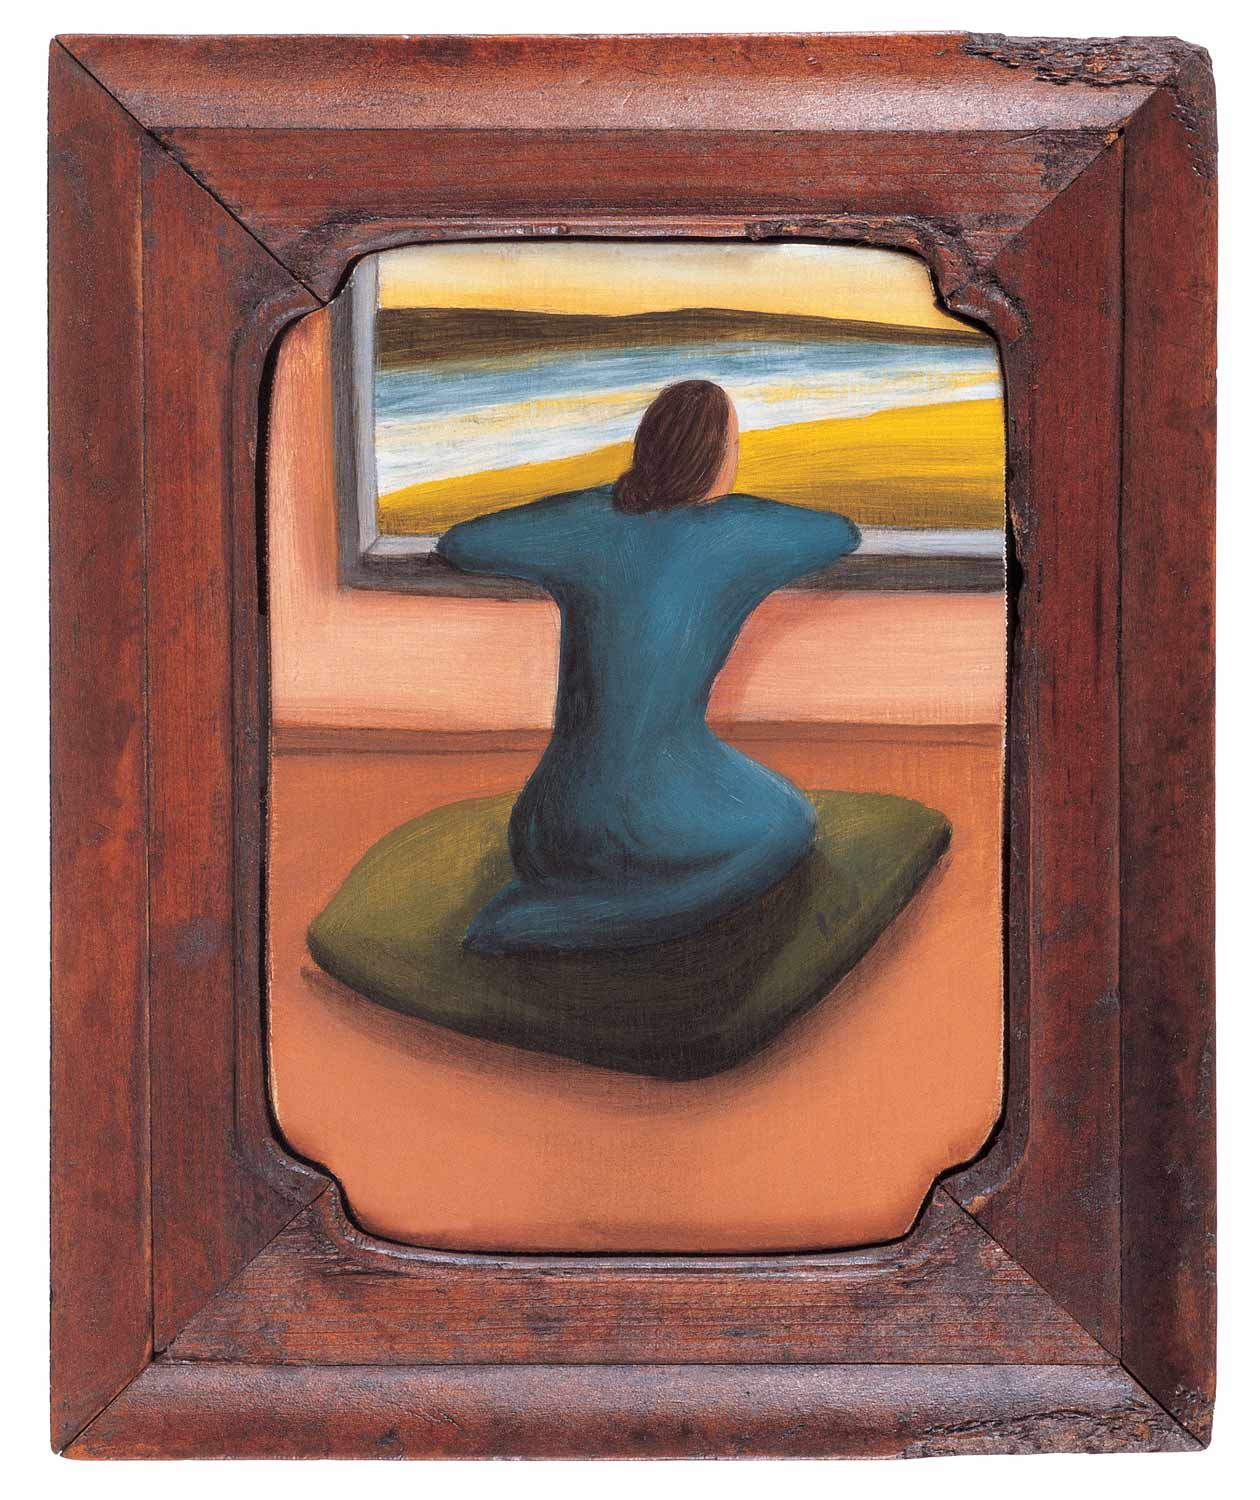 <em>Relentless River</em>, 1992. Oil on wood, 7 x 5 in. (18 x 13 cm)